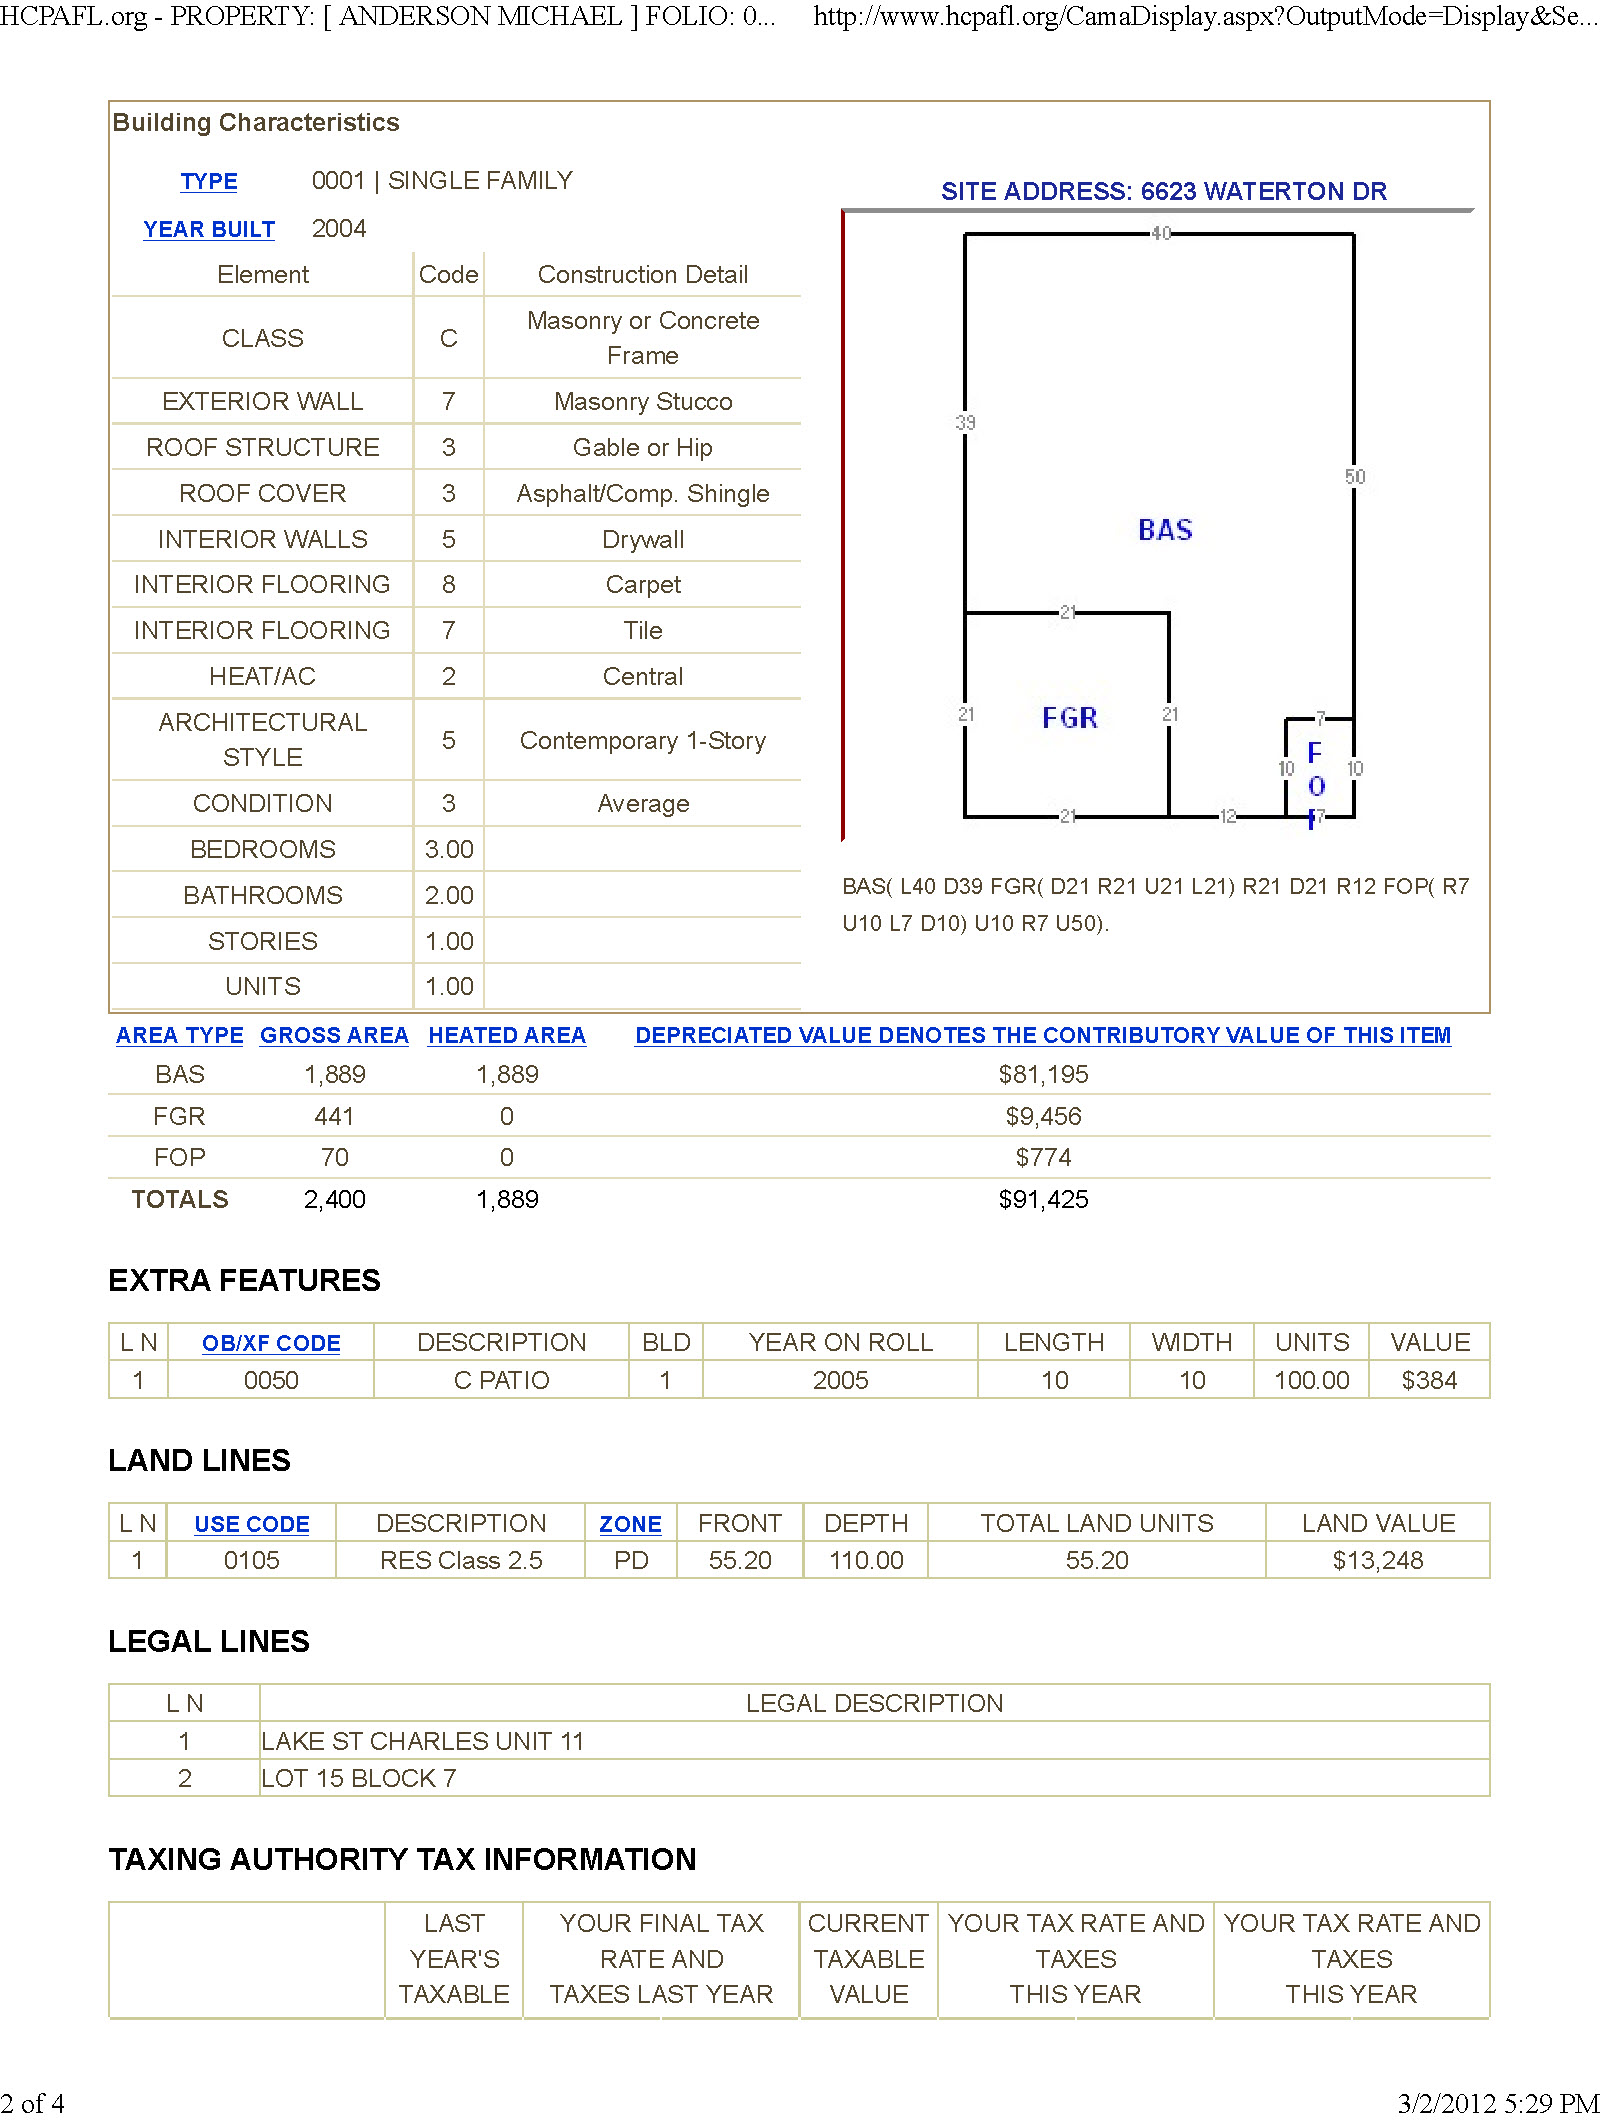 Copy of anderson ethel property tax info2.jpg